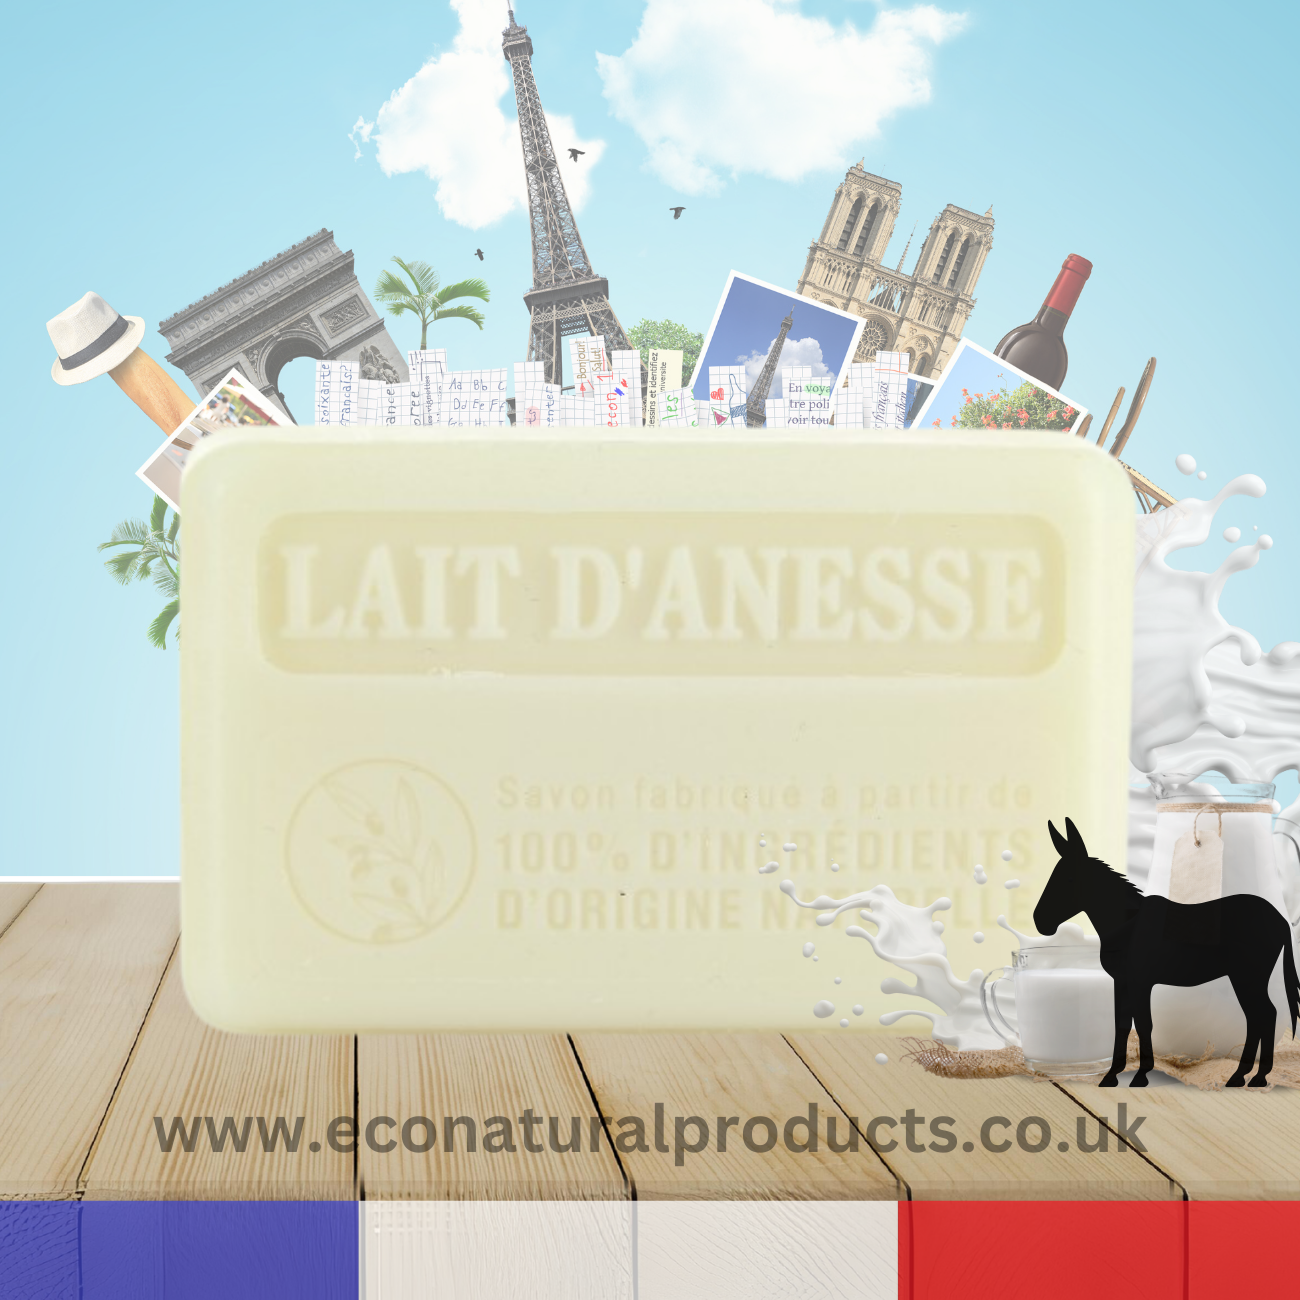 Marseille Soap 100% Natural Lait d'Anesse 5% (Donkey Milk) Fragrance Free 125g